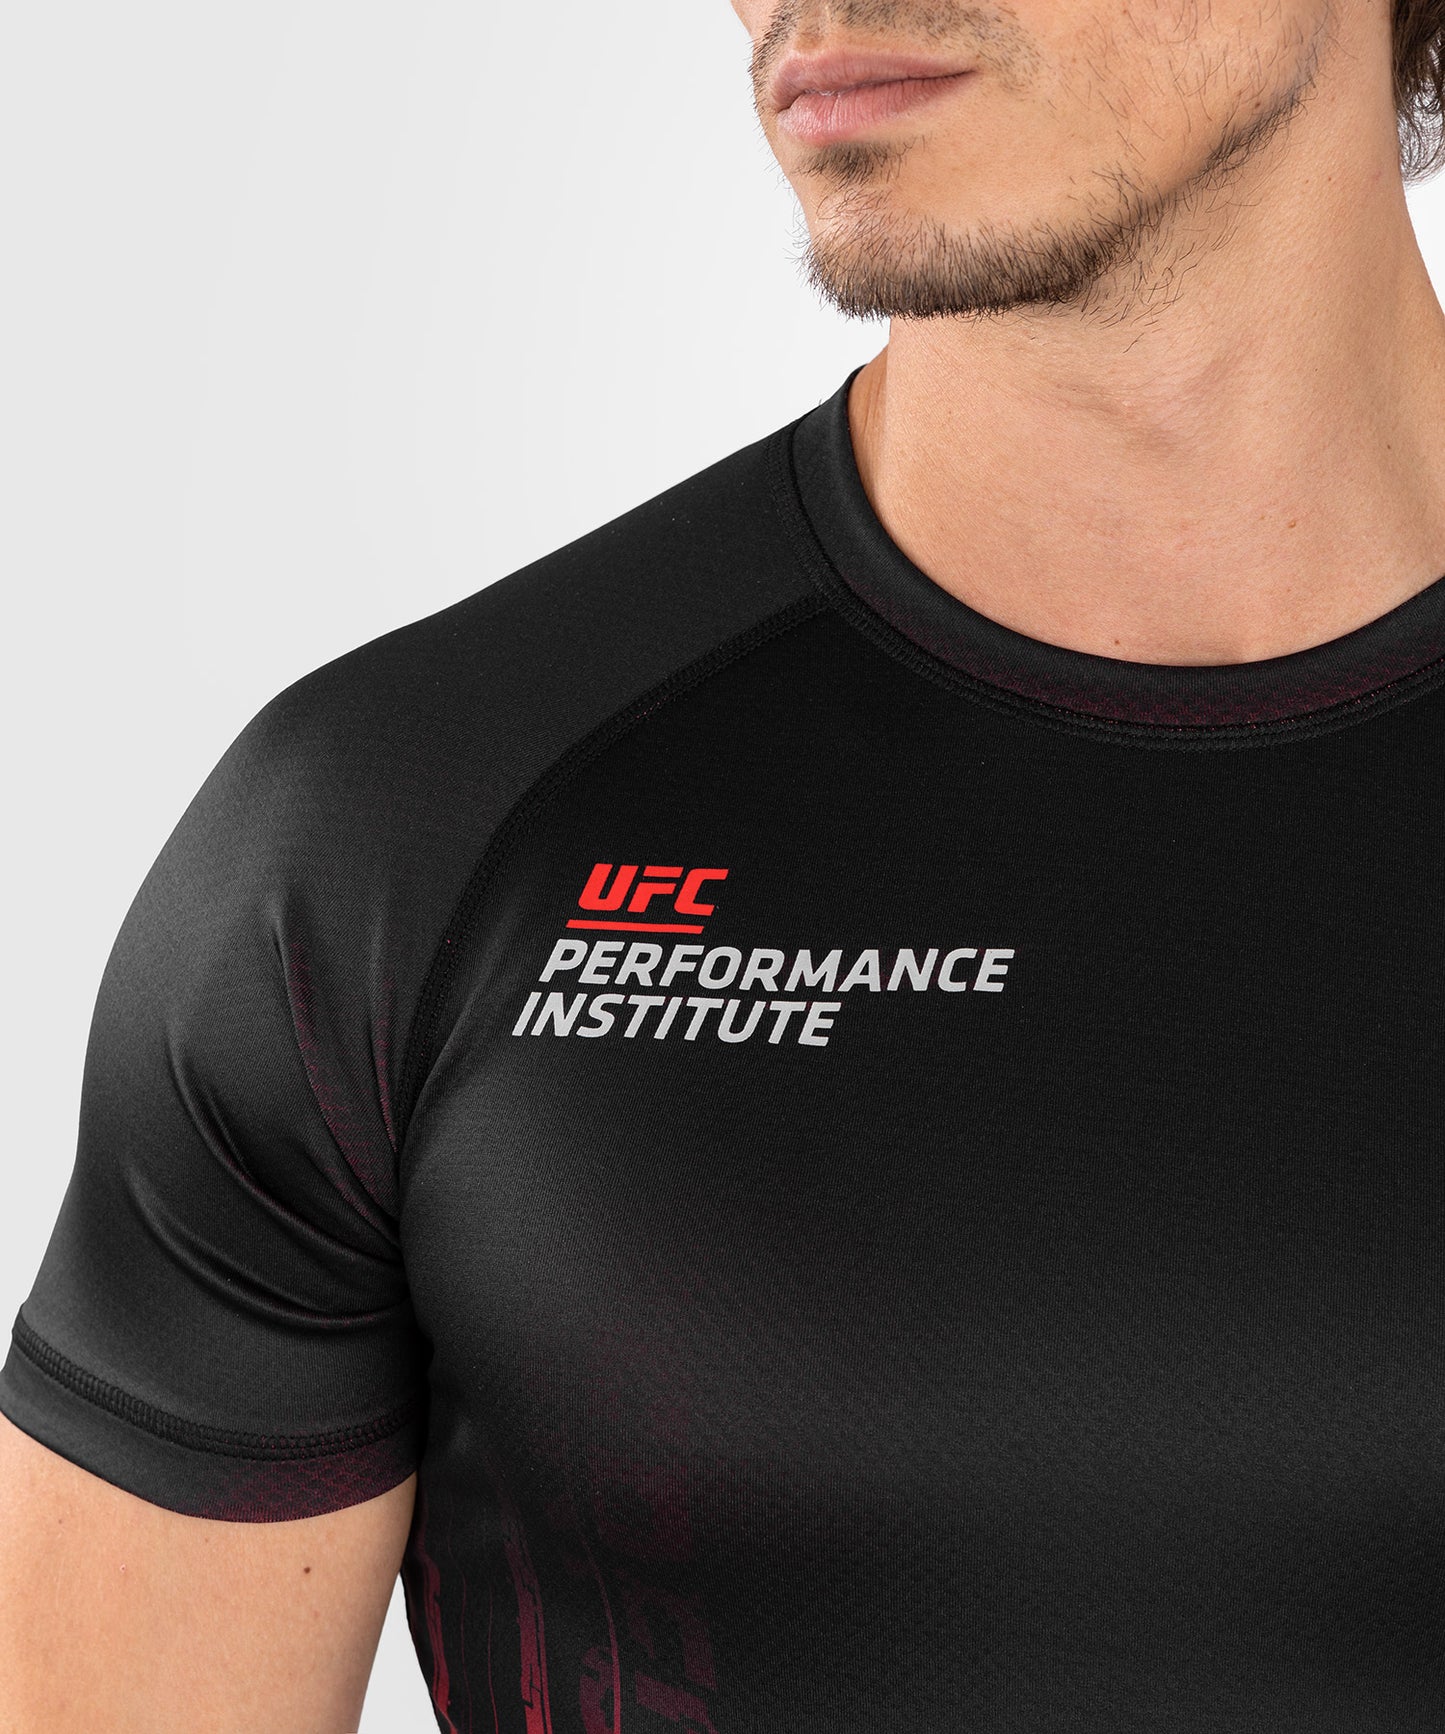 UFC Venum Performance Institute 2.0 Men’s Short-Sleeve Rashguard - Black/Red XXXL